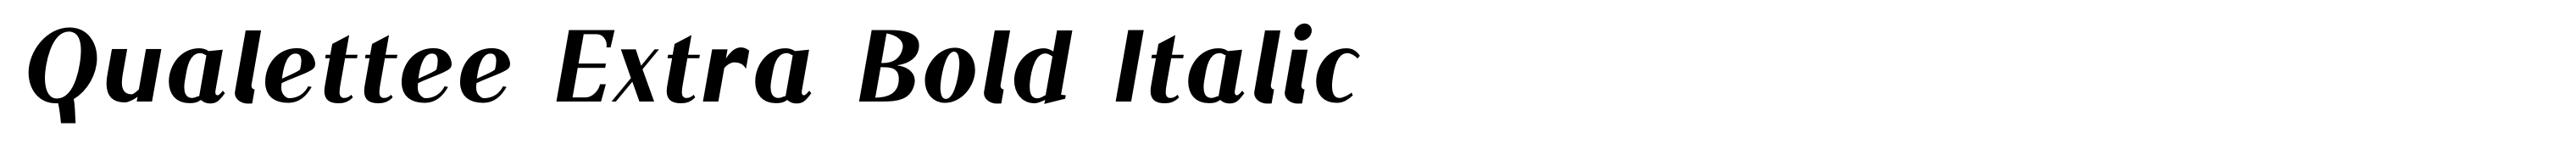 Qualettee Extra Bold Italic